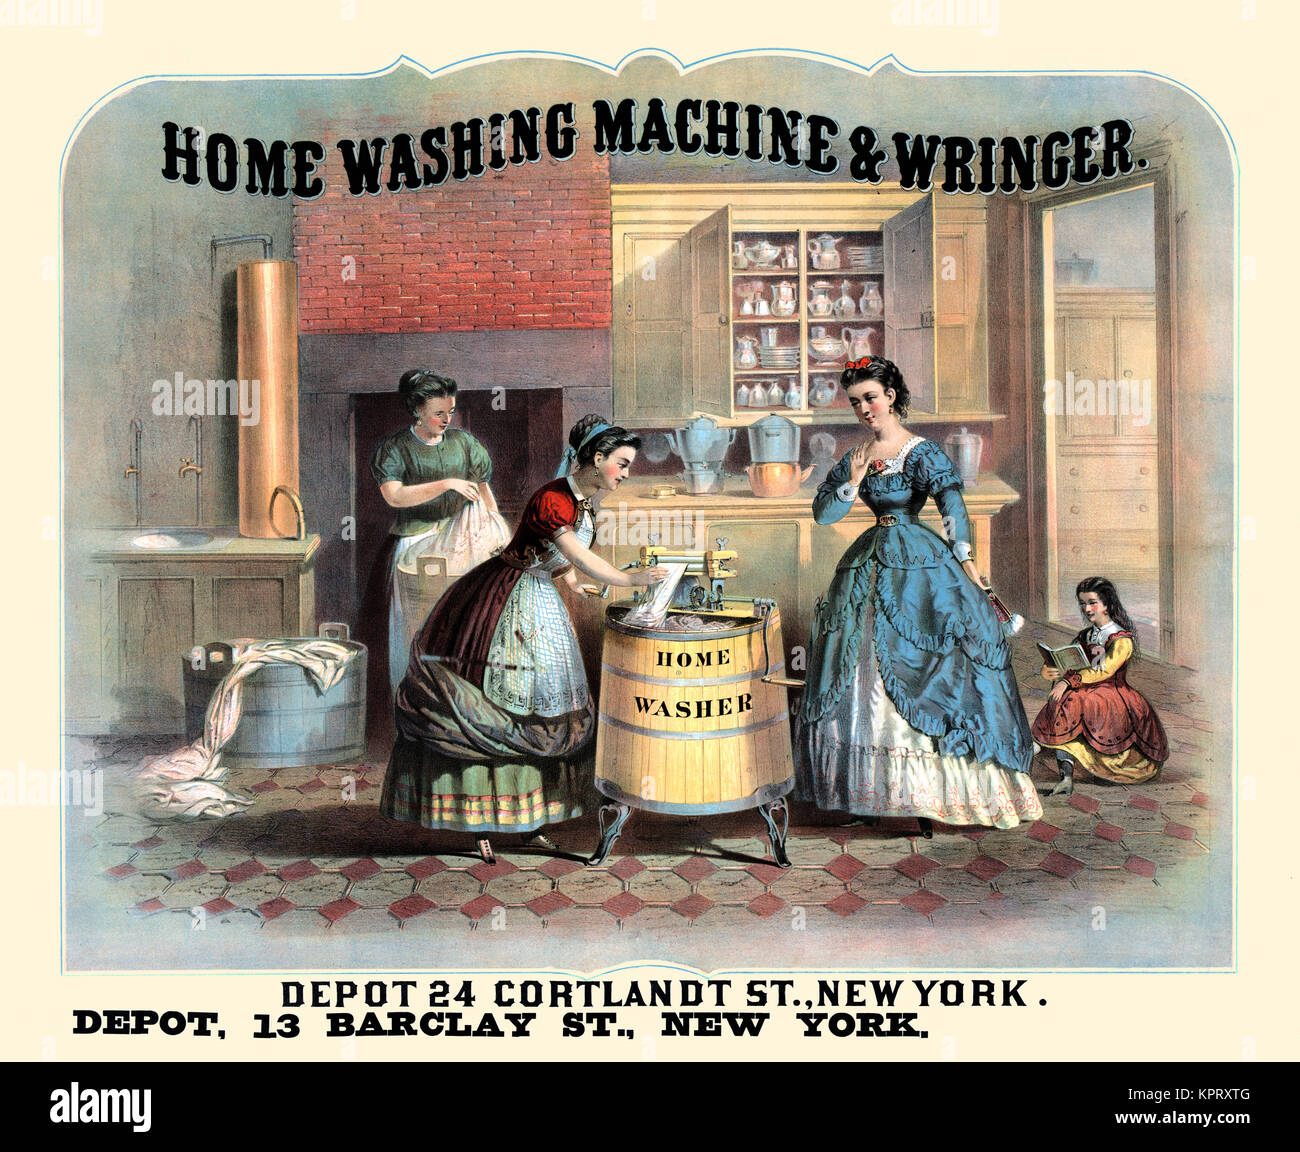 Home washing machine & wringer Stock Photo